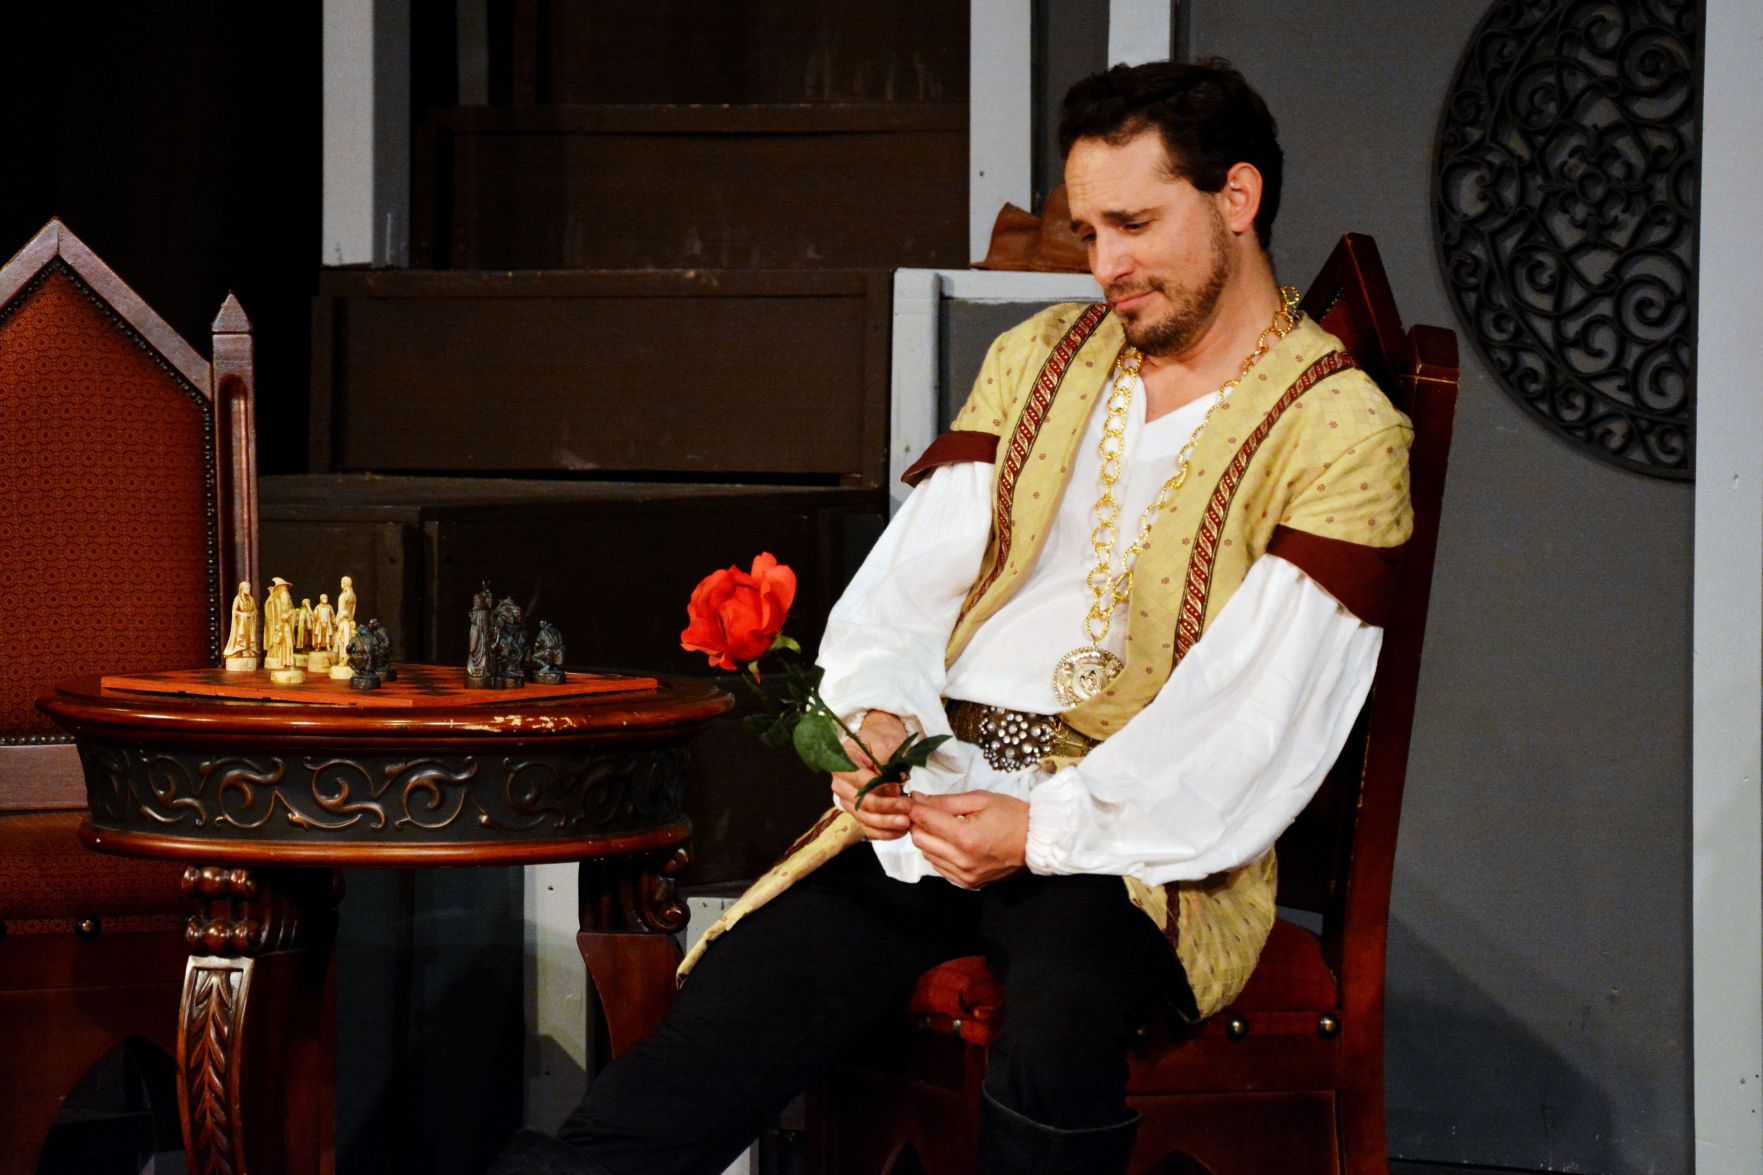 A pensive Andrew Cruse as King Arthur. Photo / Scott Custer